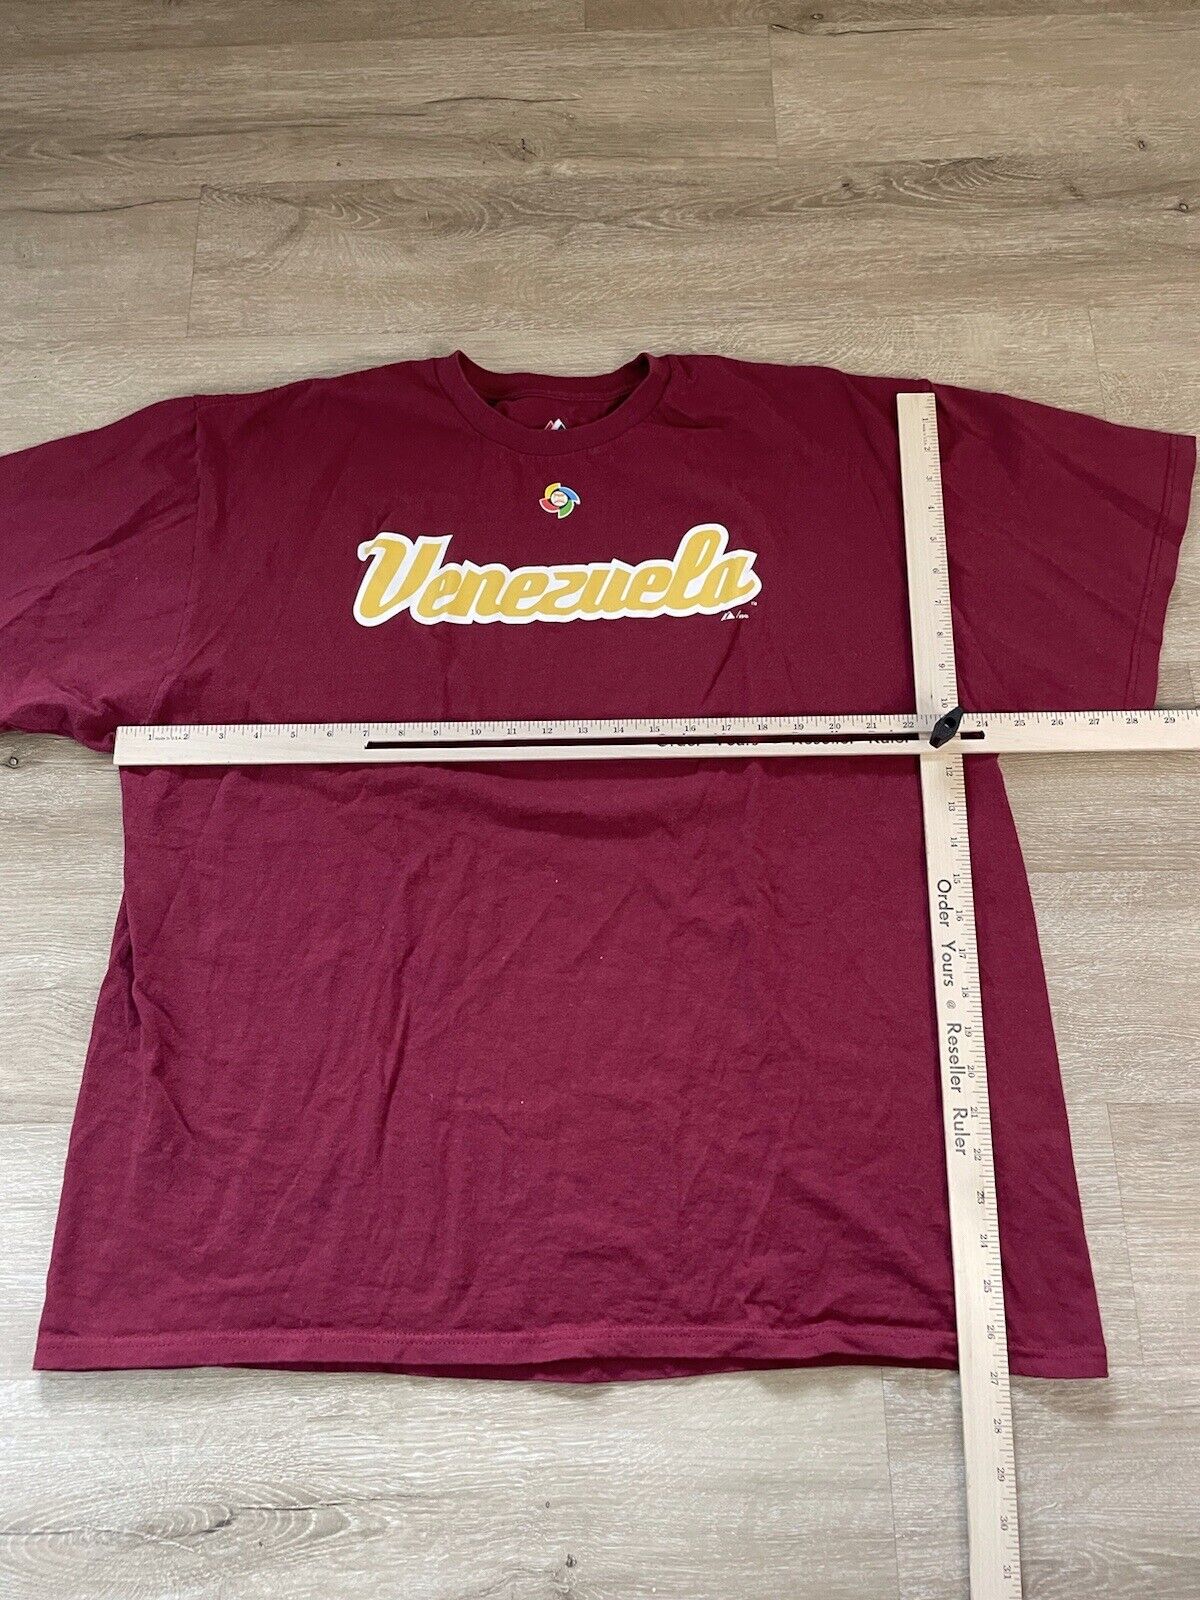 Men’s Majestic Sz 2XL Venezuela Baseball T-Shirt Burgundy MLB Short Sleeve